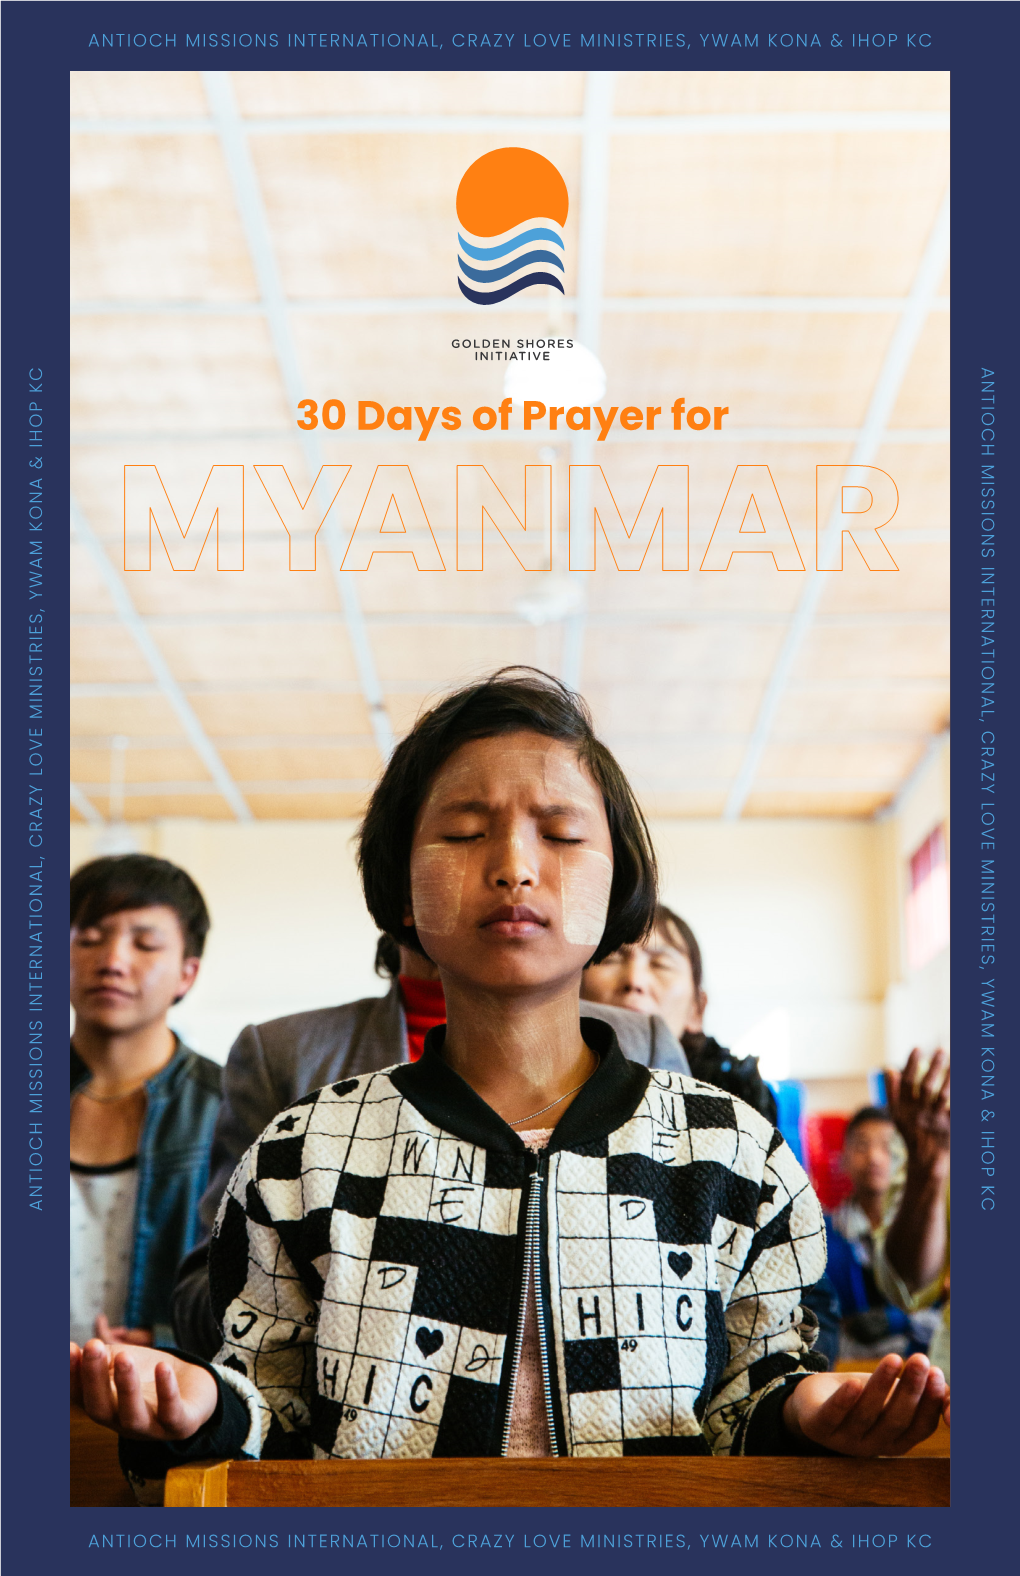 Myanmar Antioch Missions International, Crazy Love Ministries, Ywam Kona & Ihop Kc